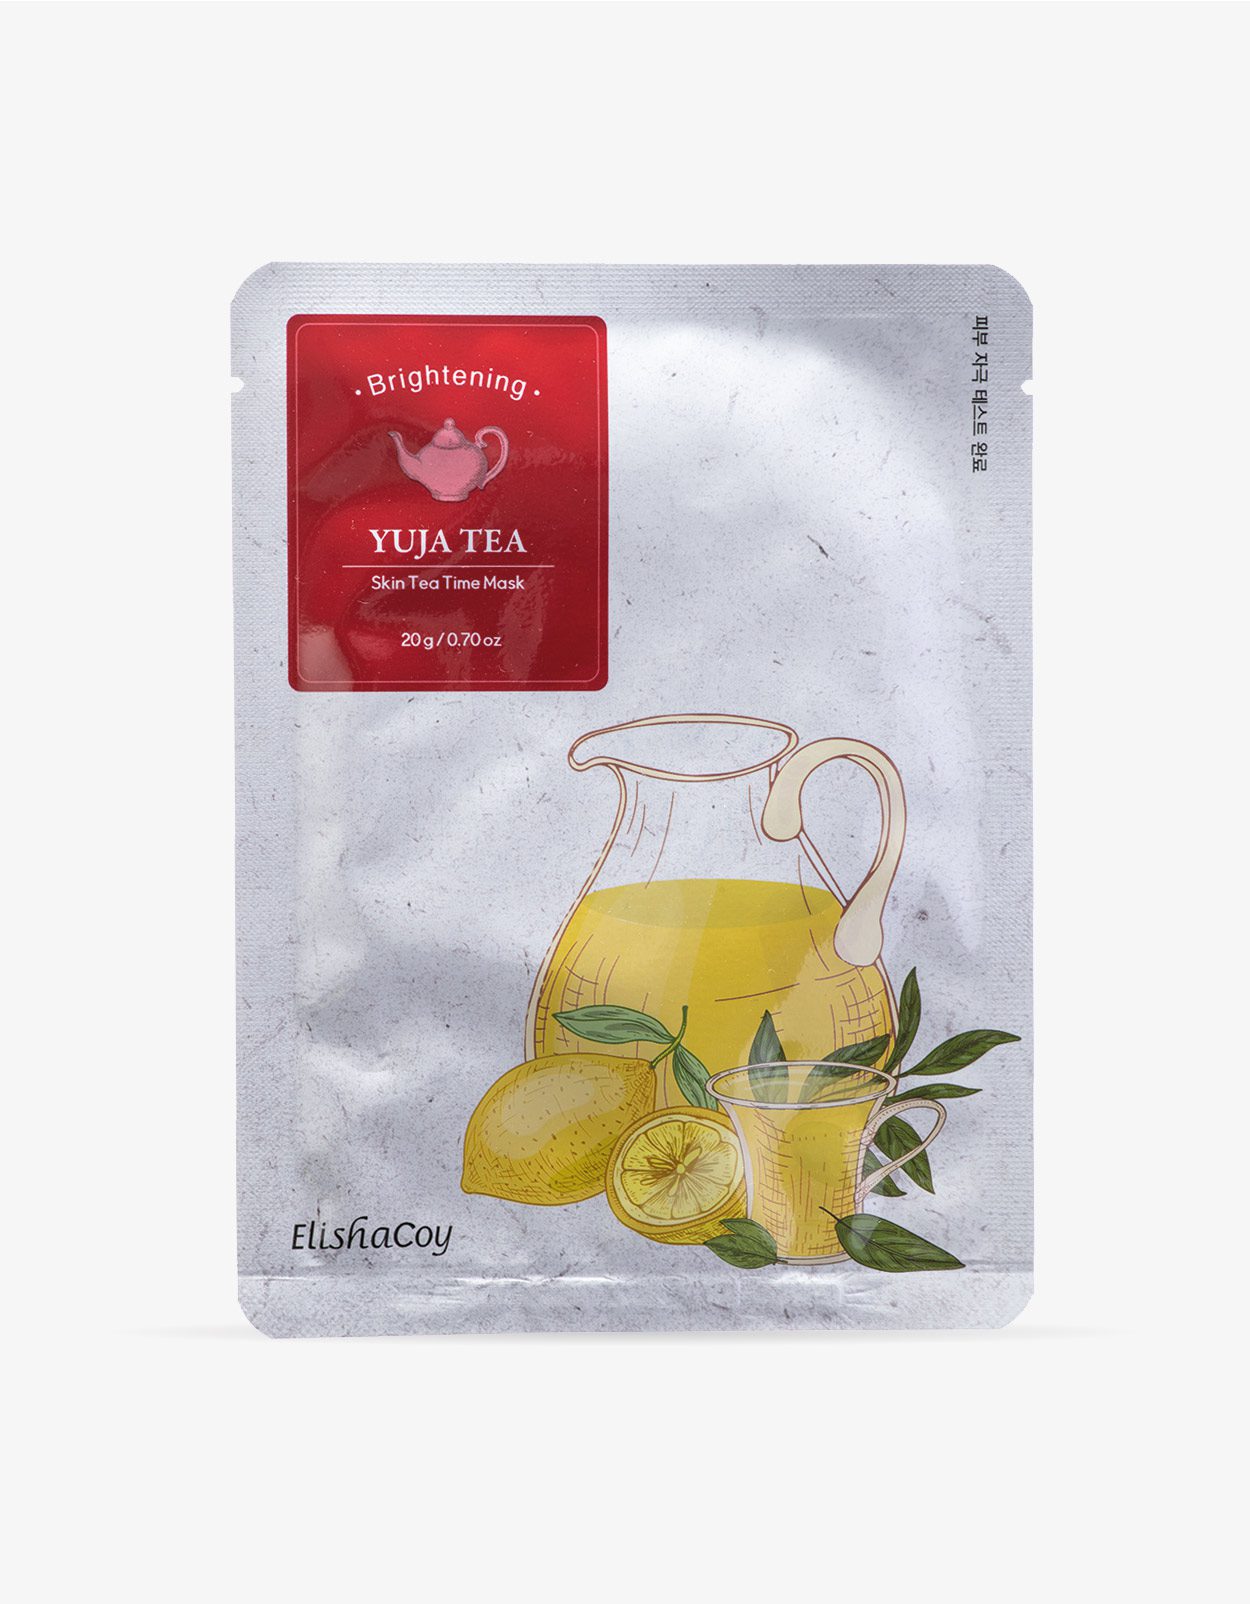 ElishaCoy Skin Tea Time Mask – Yuja Tea 20g